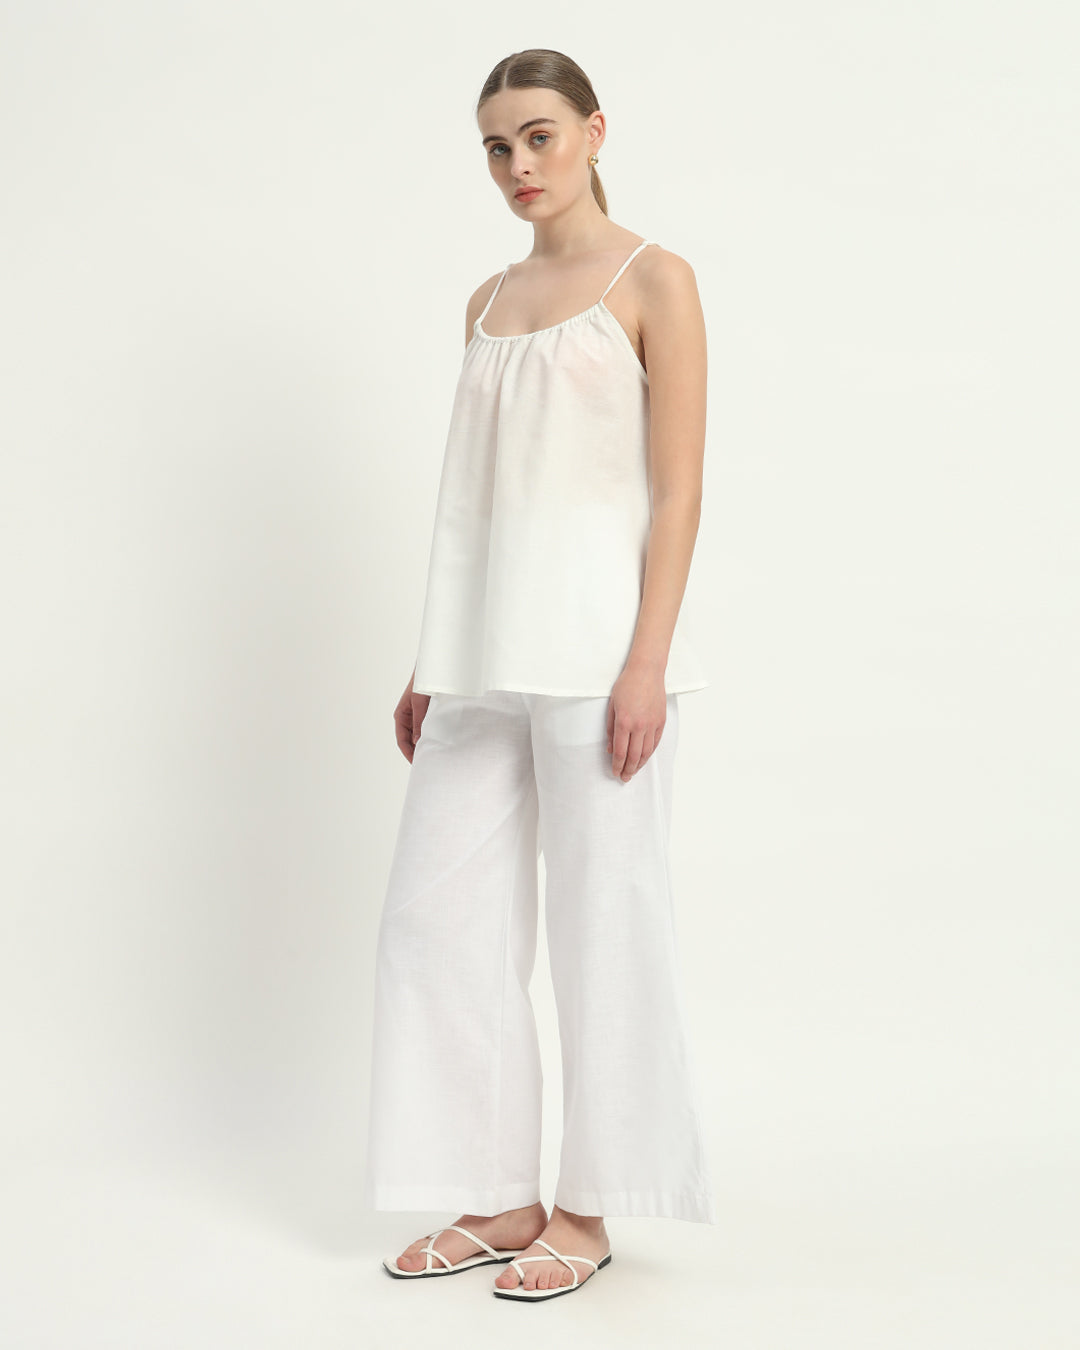 Pants Matching Set- White Linen Easy Breeze Adjustable Neck